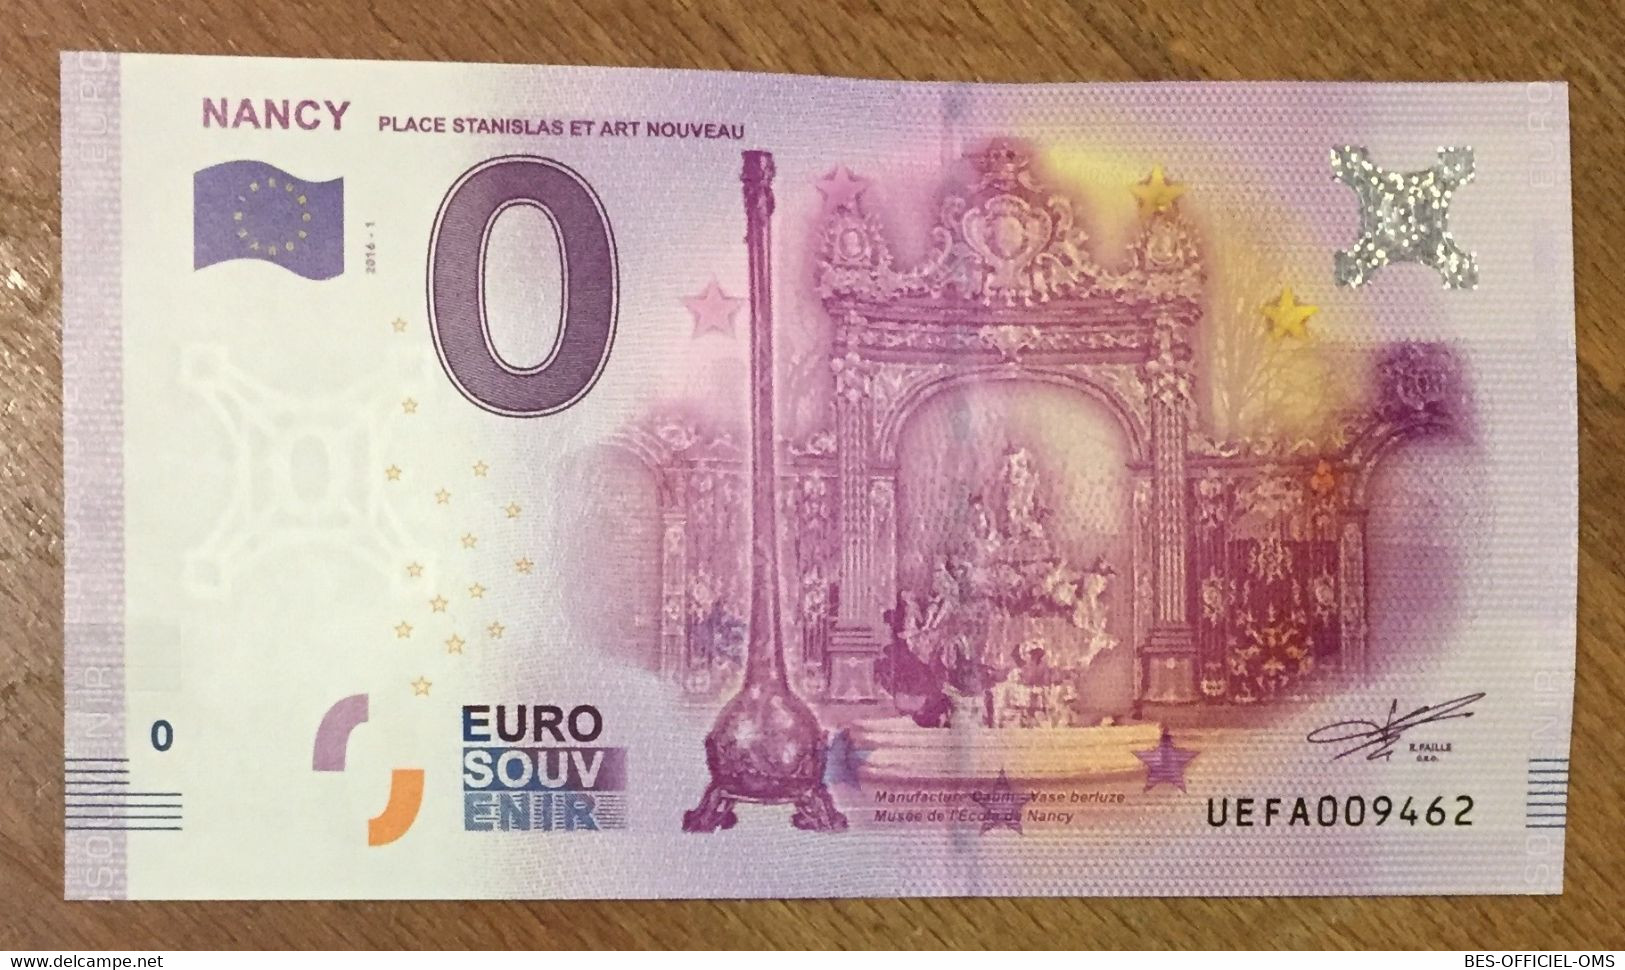 2016 BILLET 0 EURO SOUVENIR DPT 54 NANCY PLACE STANISLAS ZERO 0 EURO SCHEIN BANKNOTE PAPER MONEY BANK - Privatentwürfe